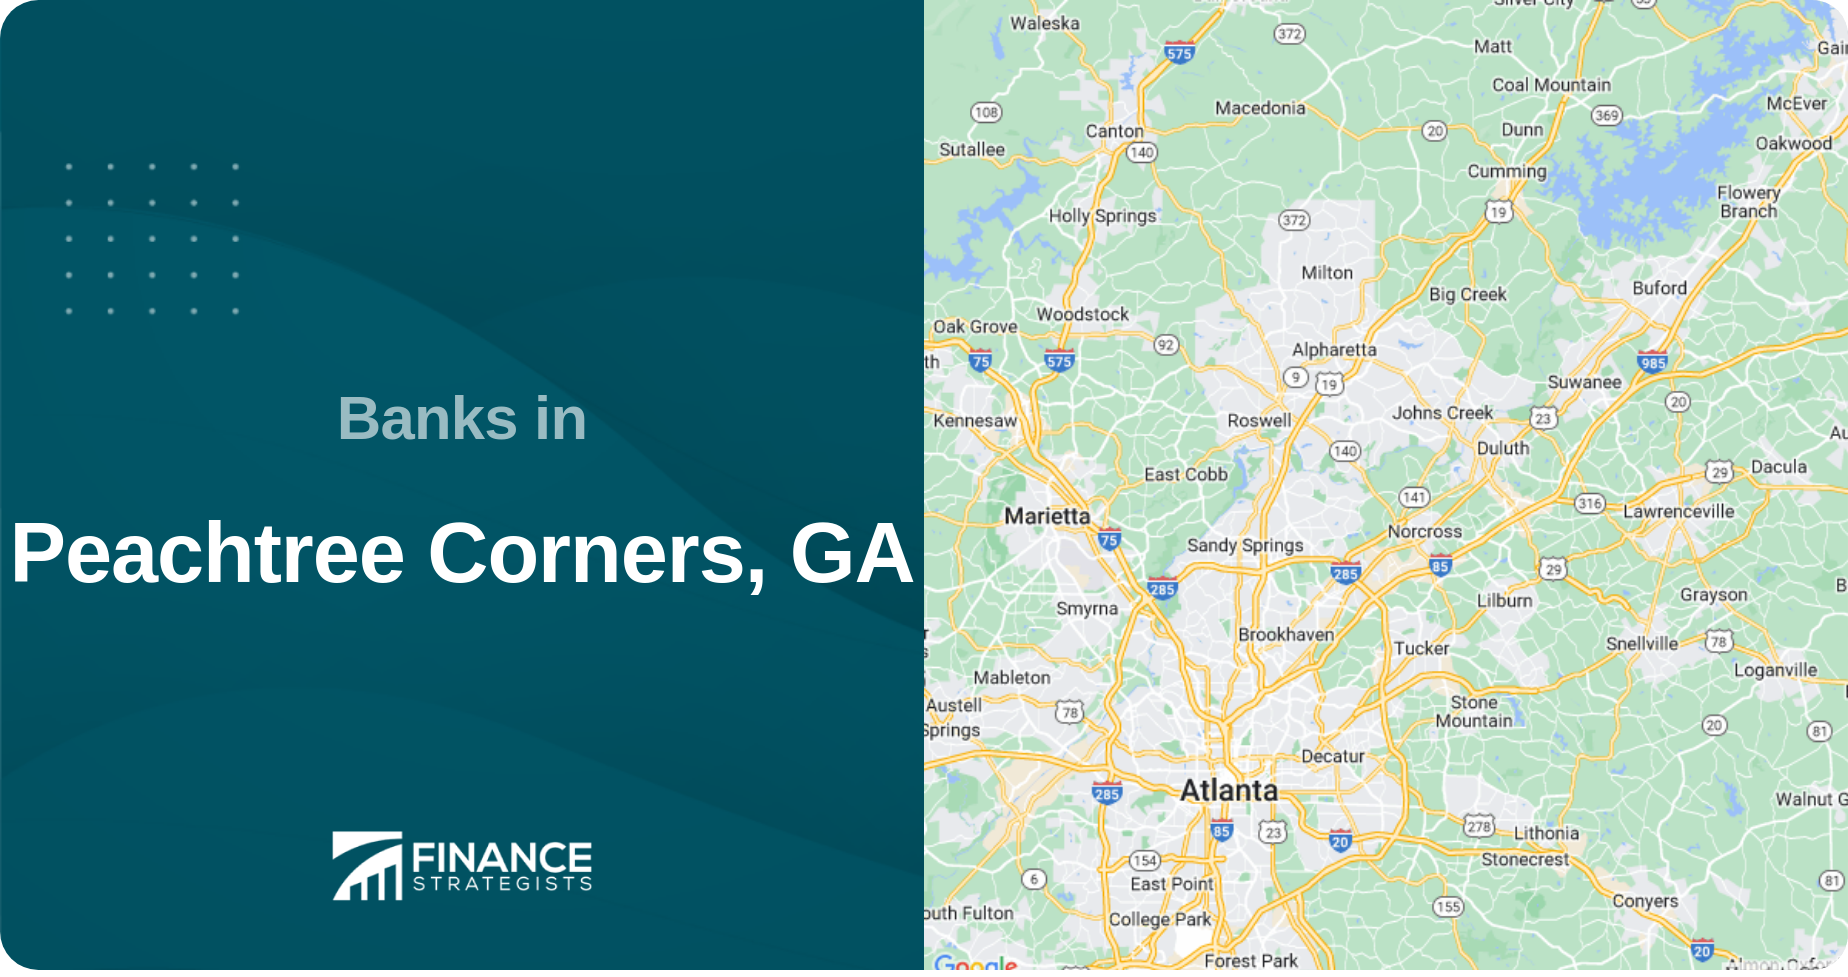 Banks in Peachtree Corners, GA